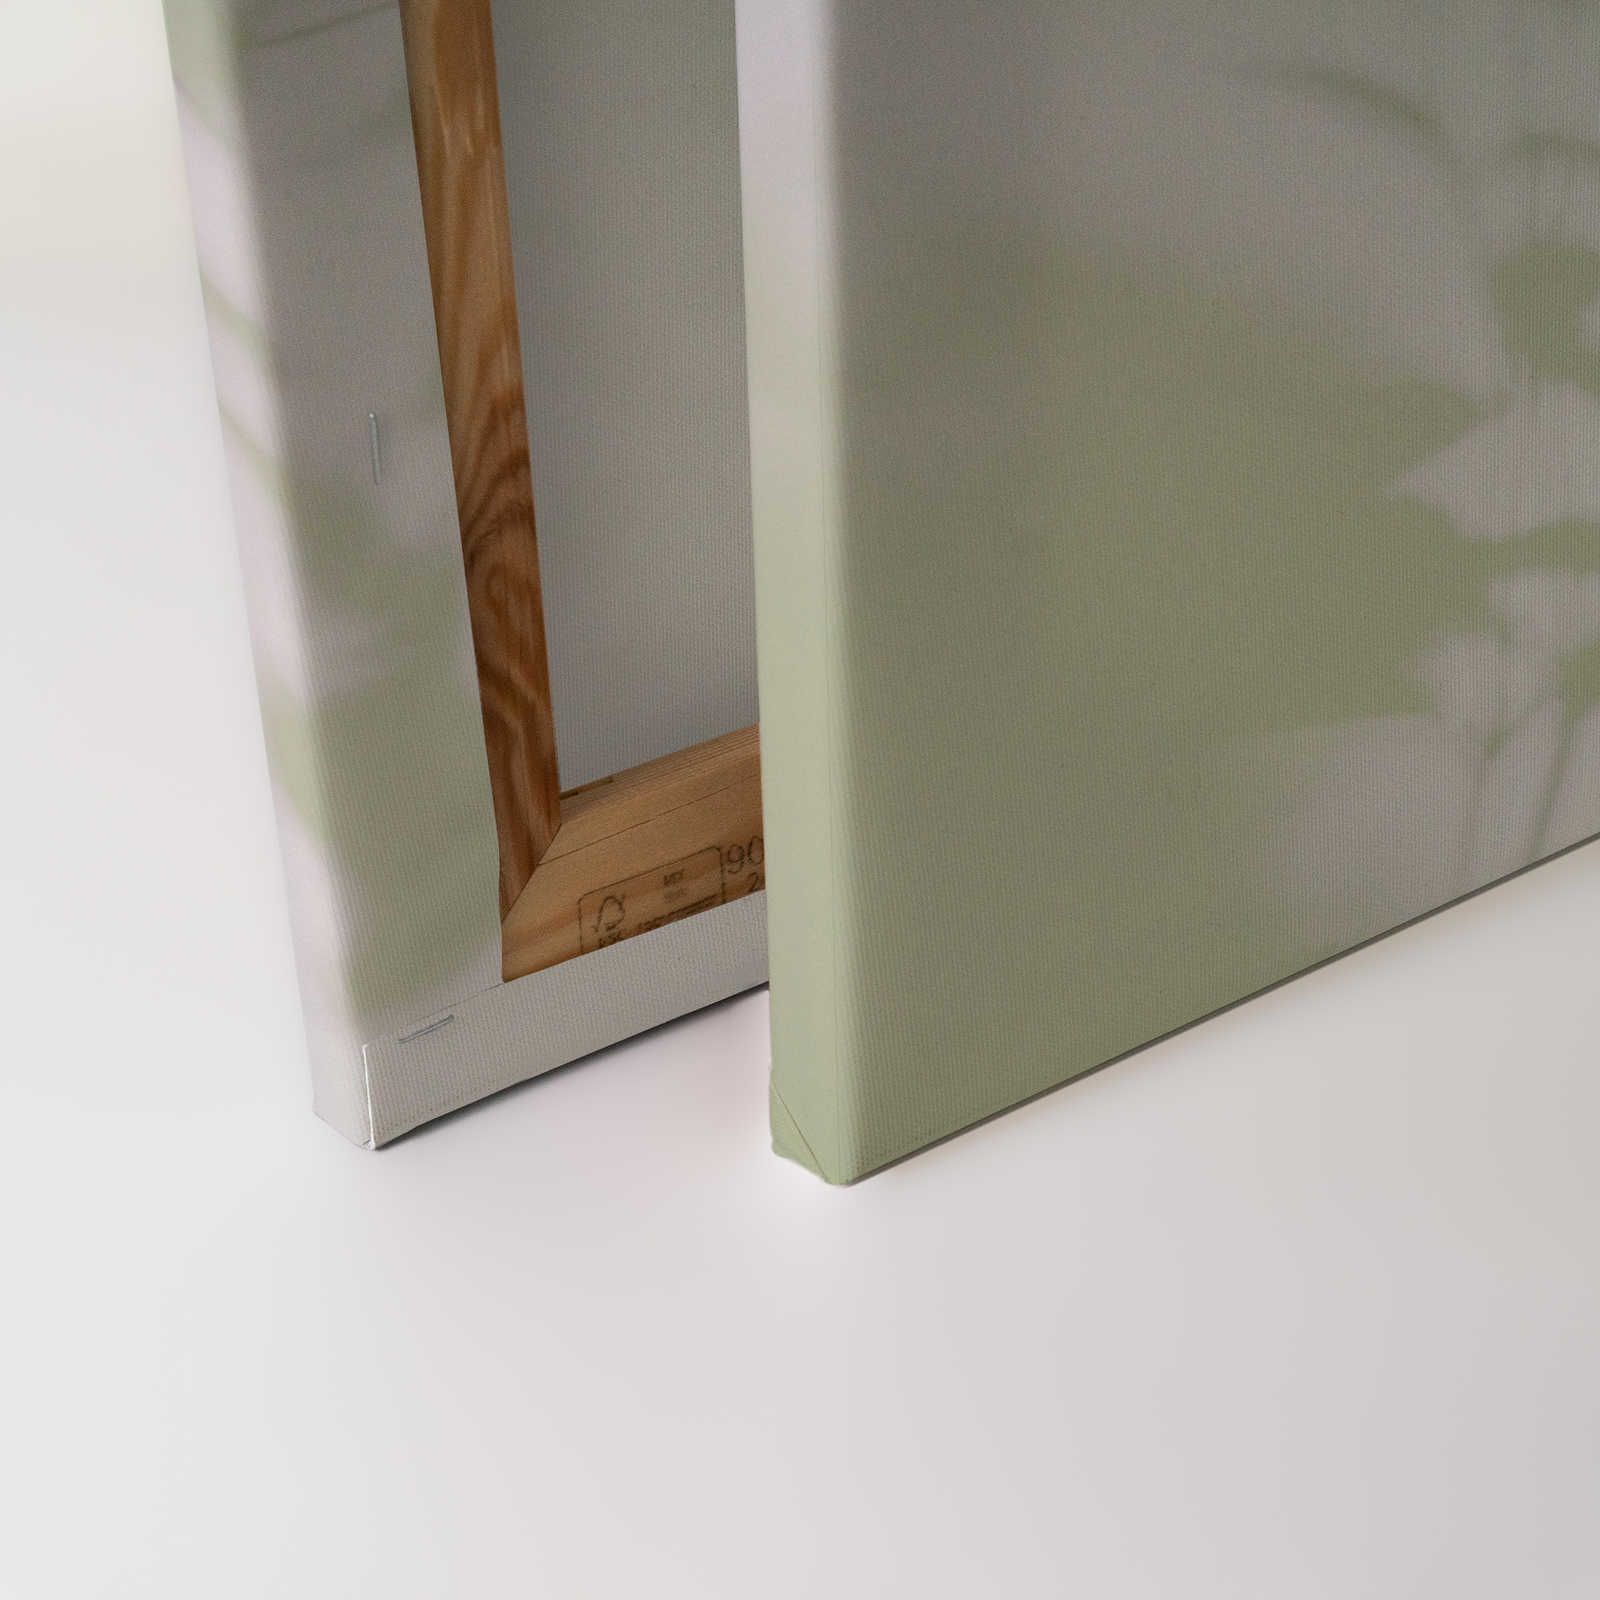             Shadow Room 3 - Natur Leinwandbild Grün & Weiß, verblasstes Design – 1,20 m x 0,80 m
        